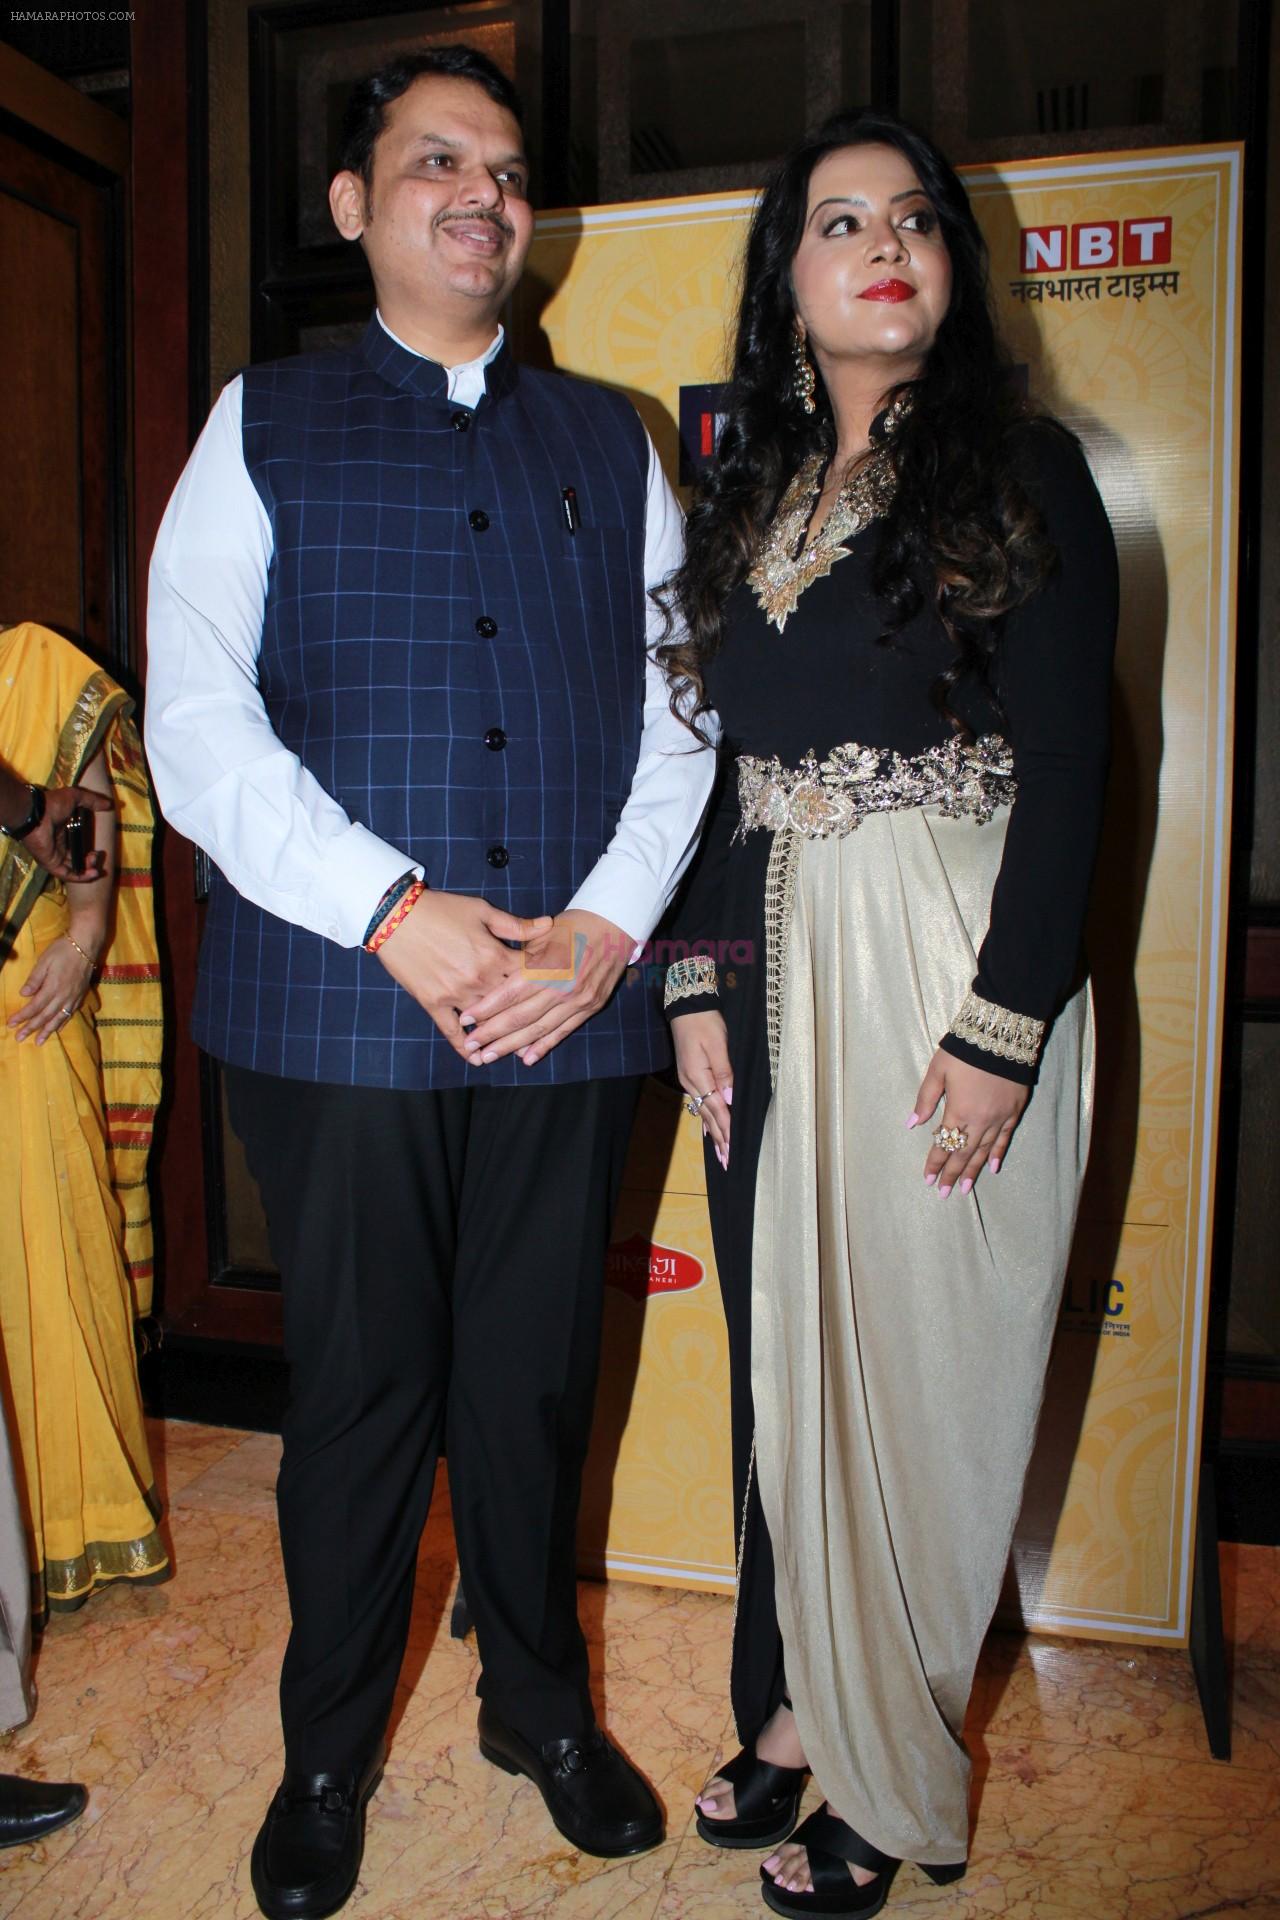 CM Devendra Fadnavis with wife Amruta Fadnavis at the red carpet of NBT Utsav Awards 2019